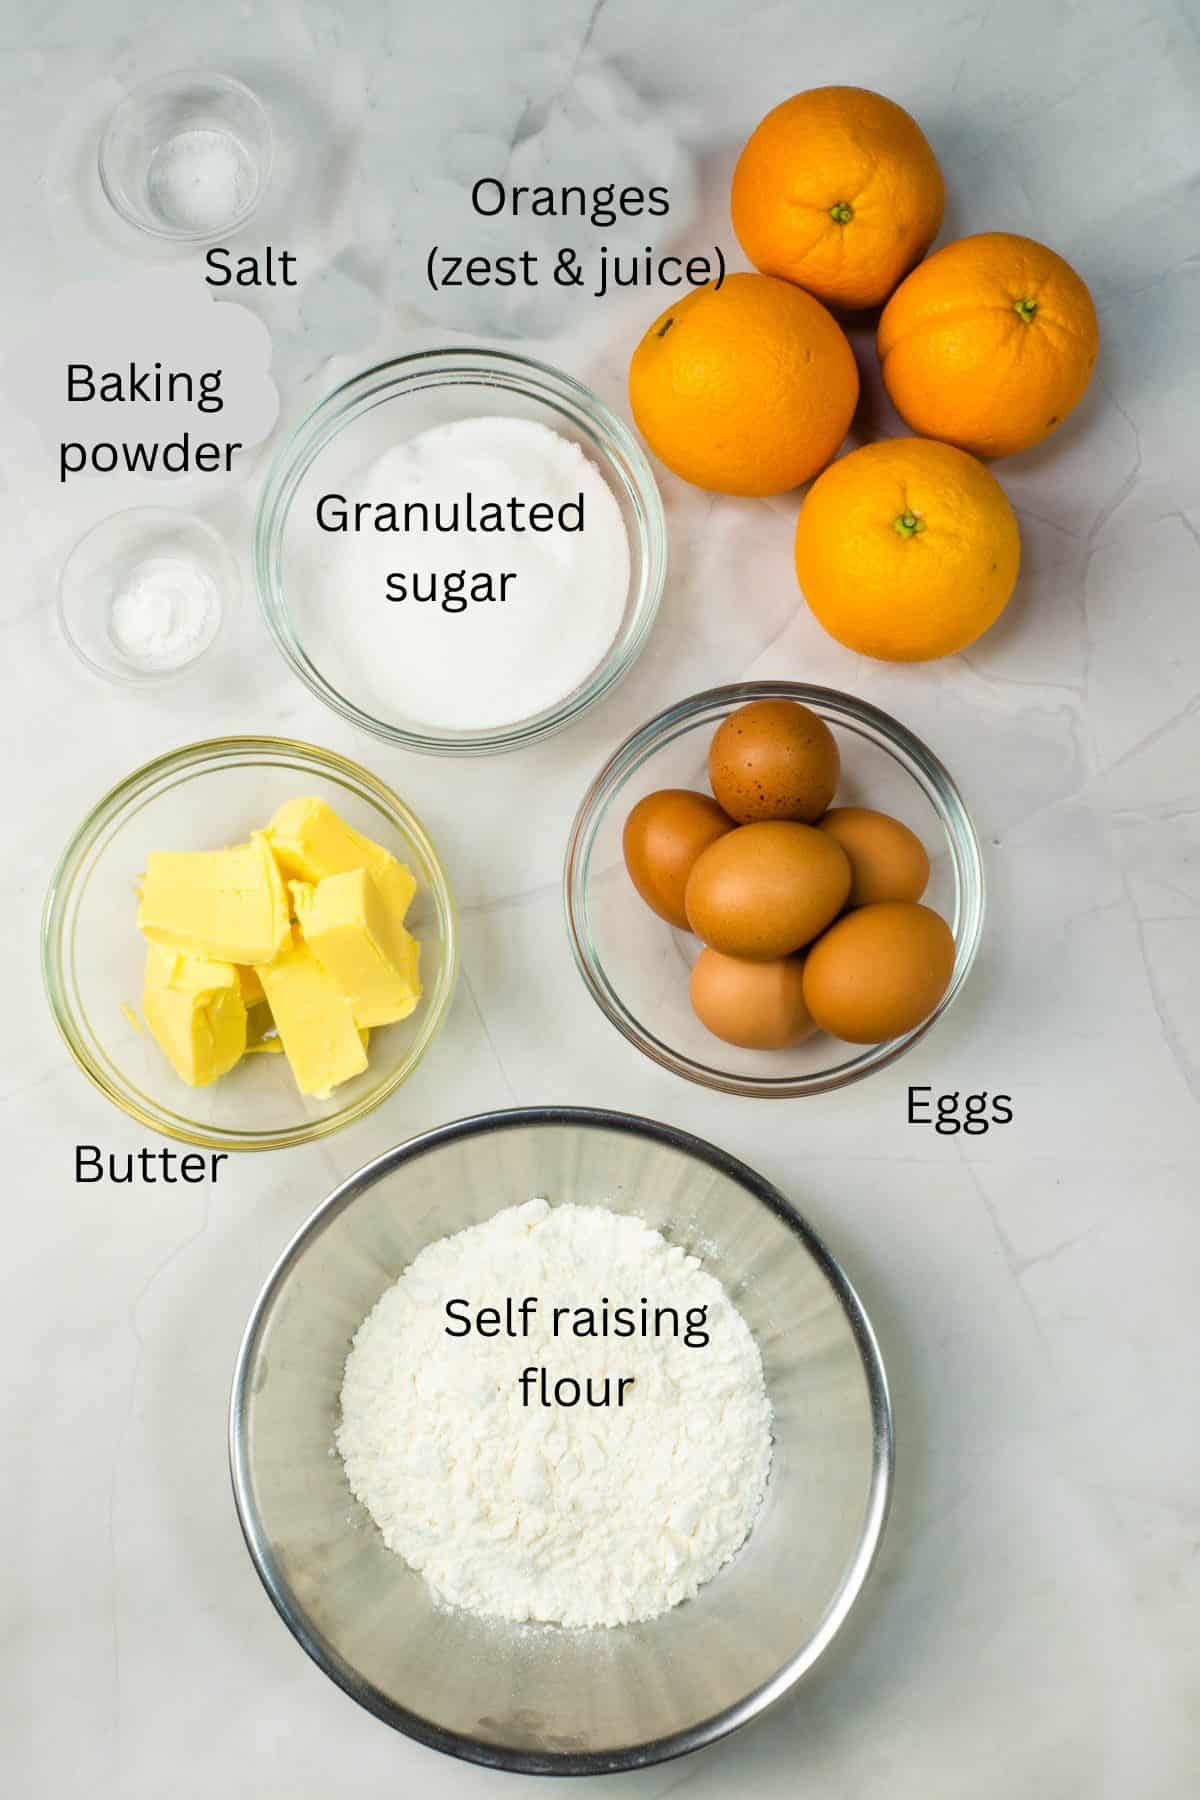 Self raising flour, granulated sugar, butter, eggs, oranges, baking powder and salt in bowls against a marble background.